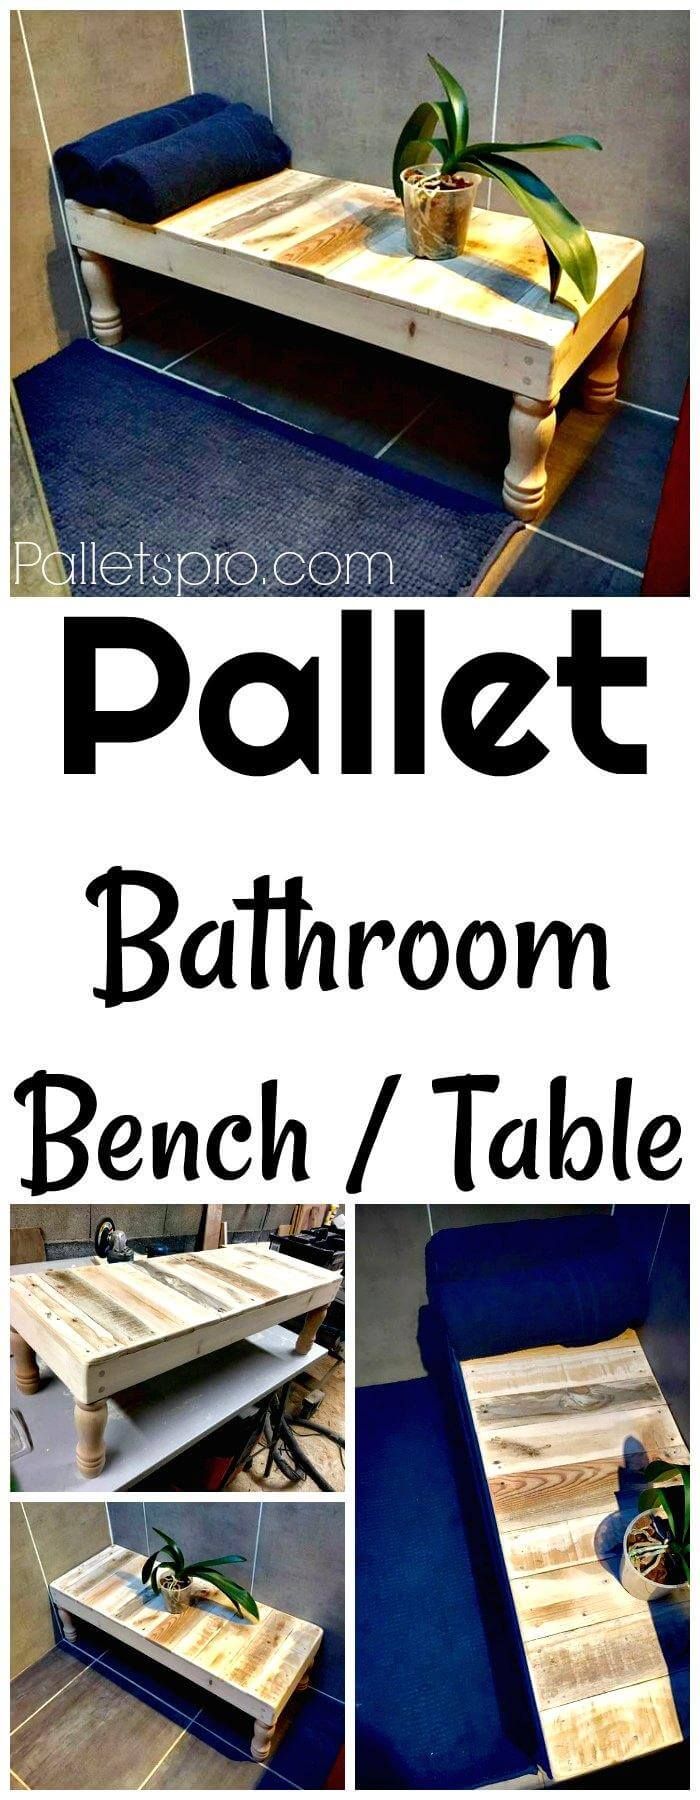 Pallet Bathroom Bench